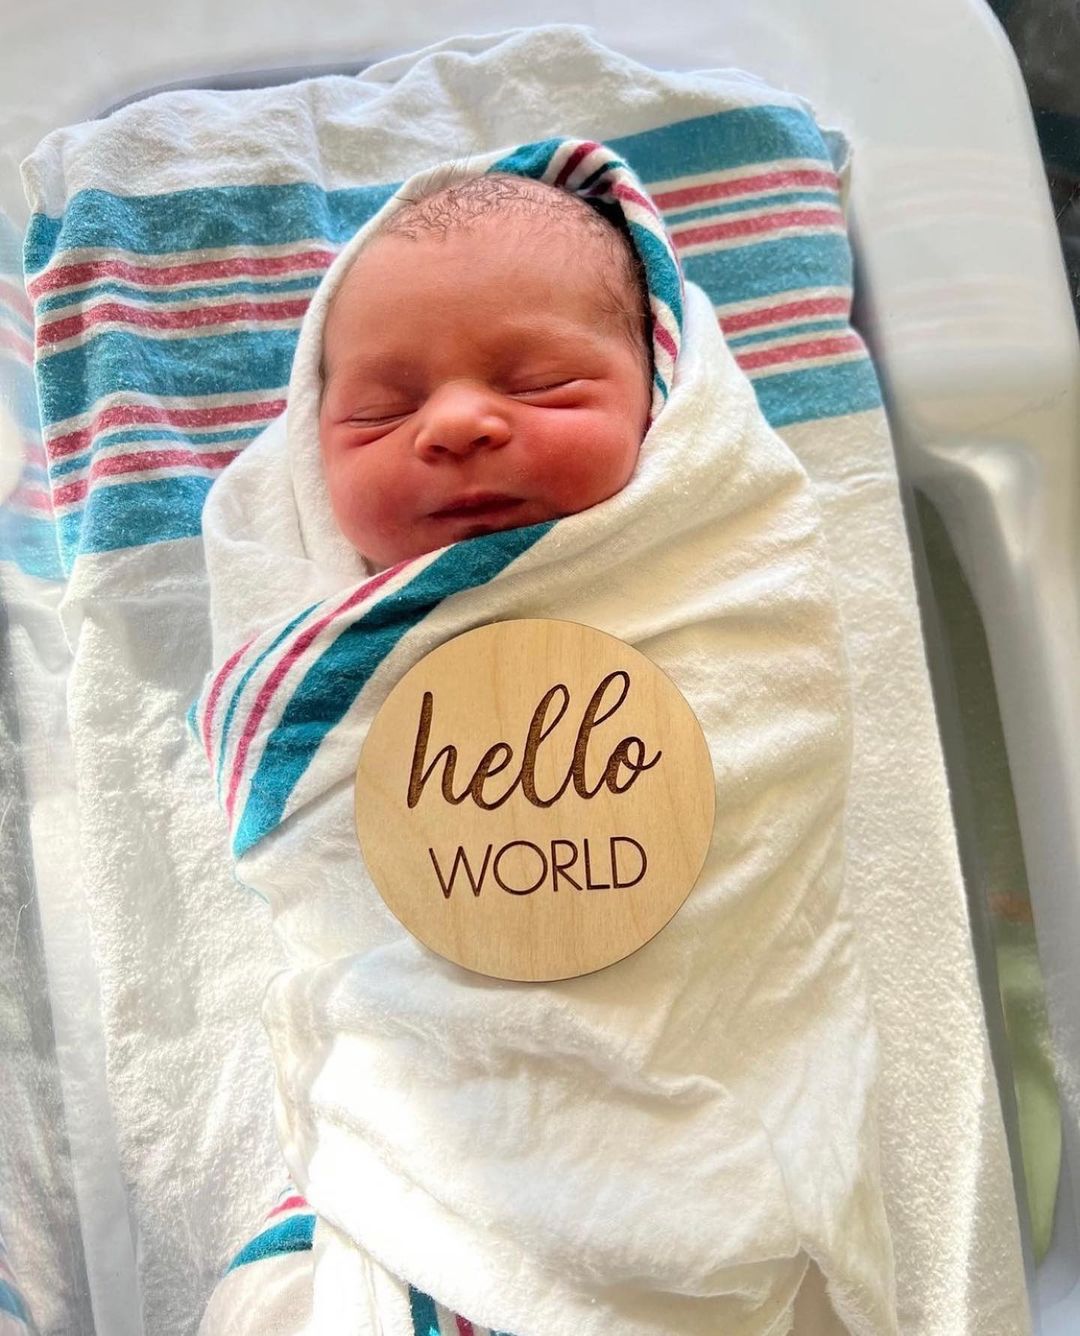 Congratulations to @radimsimek44 and Anna on the birth of their baby girl, Melin...